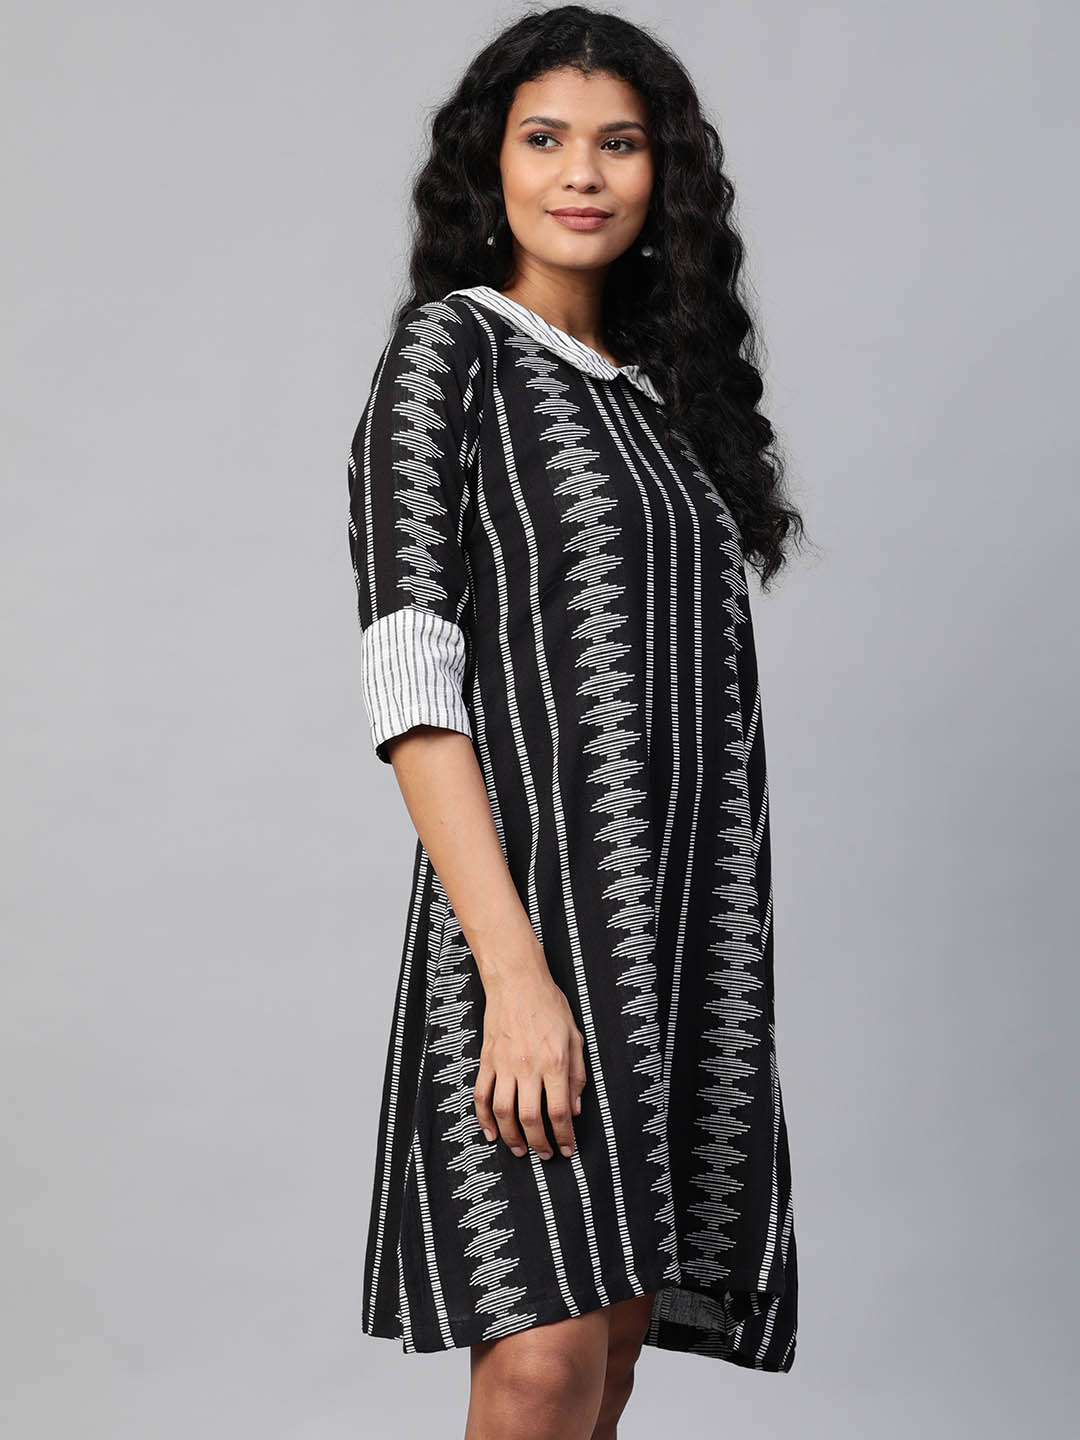 Black & White Ikkat Self-Striped A-Line Dress